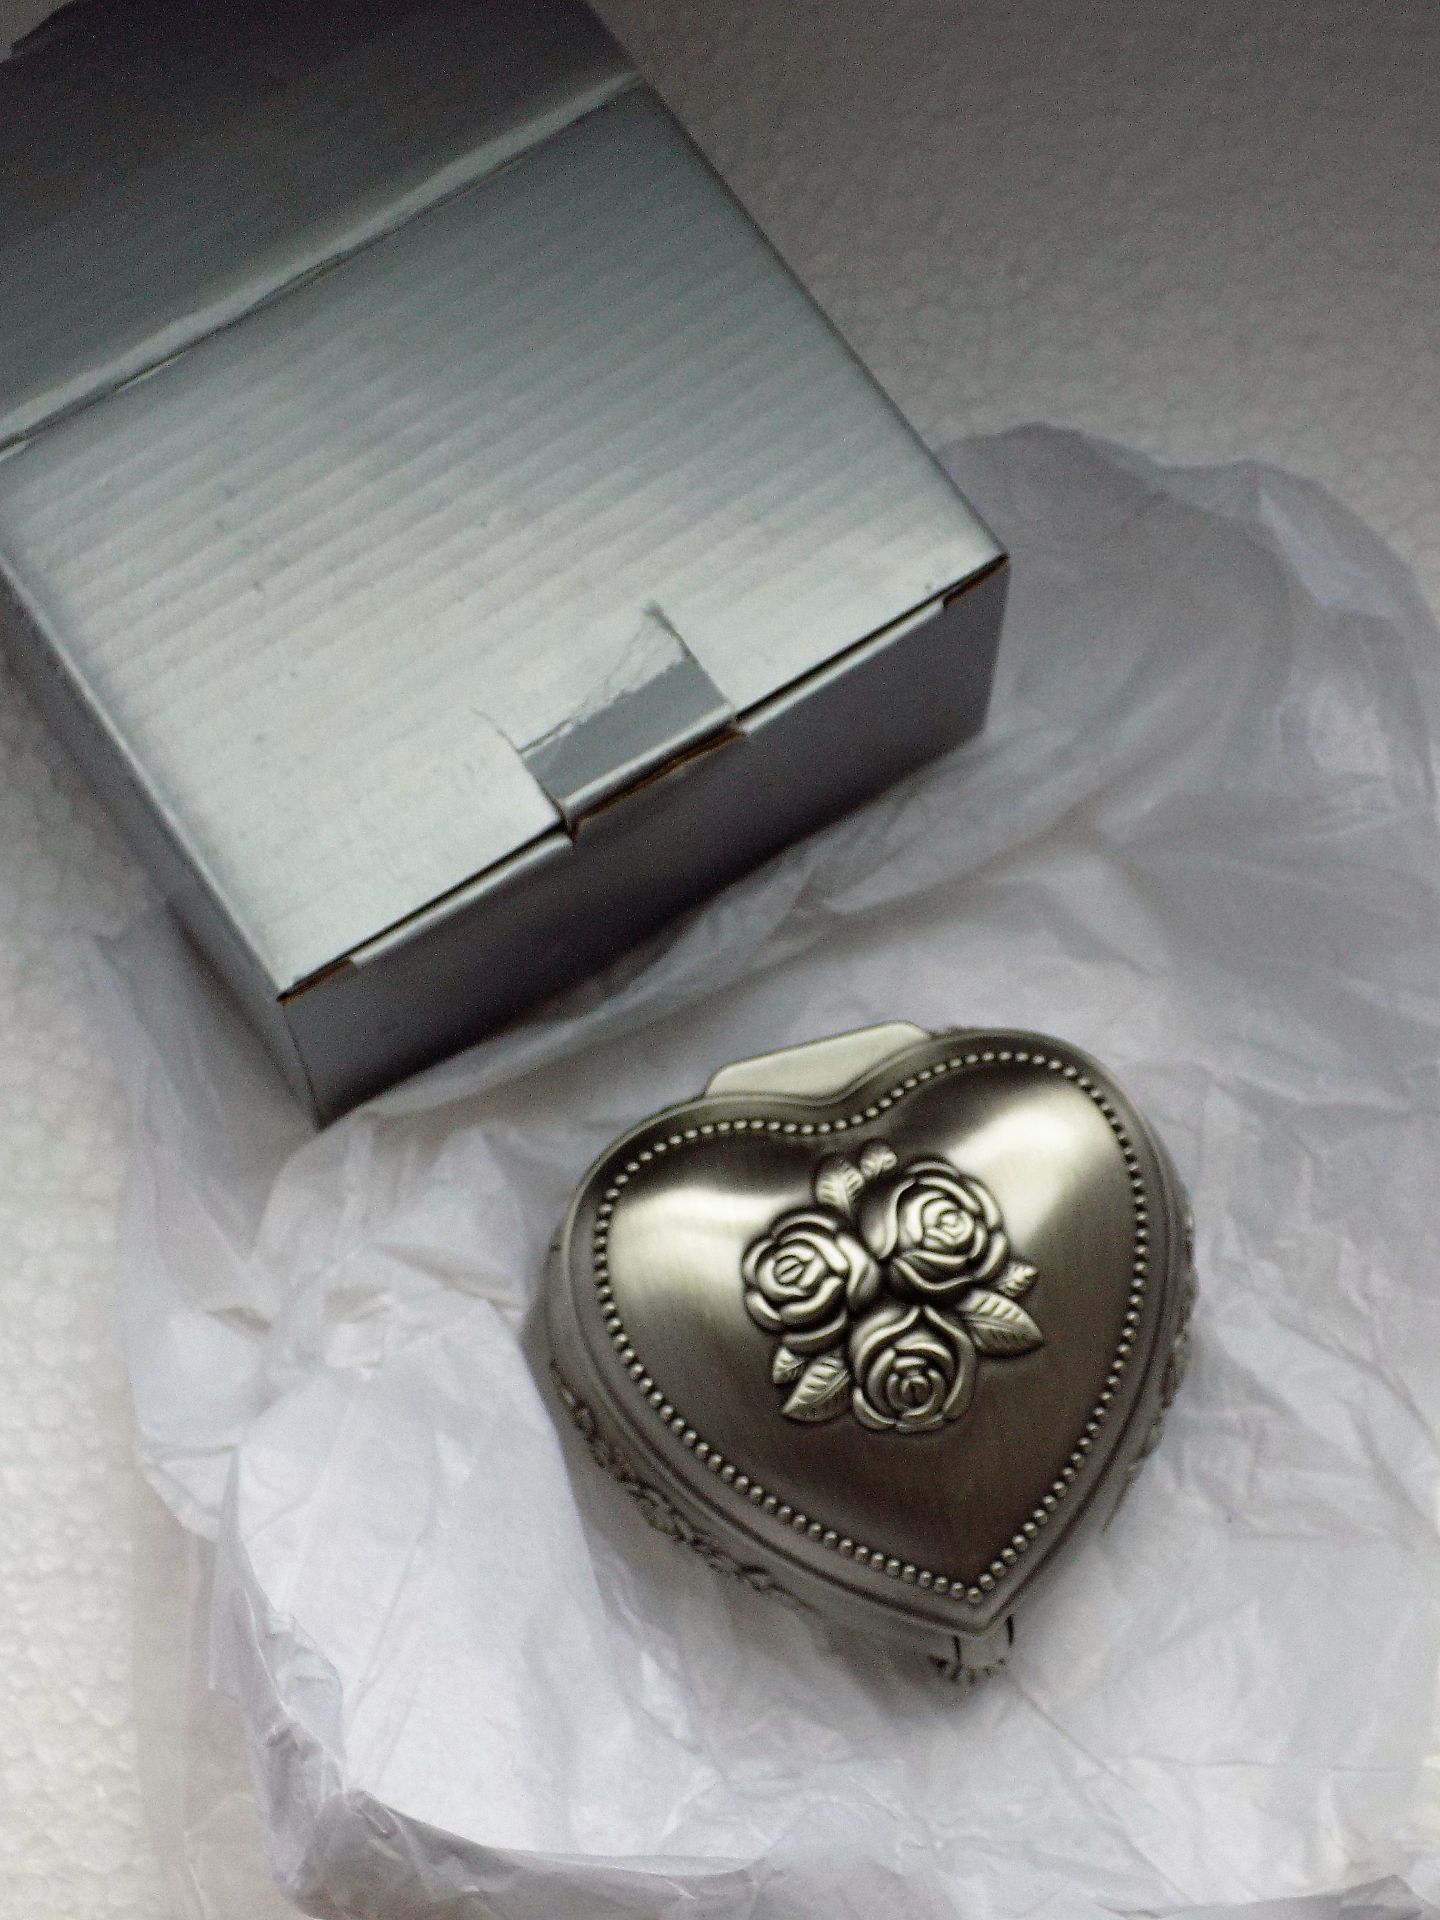 Qty x 10 Rose Detail Heart Shaped Lockets. Width 8cm; Height 4cm; Depth 8cm.